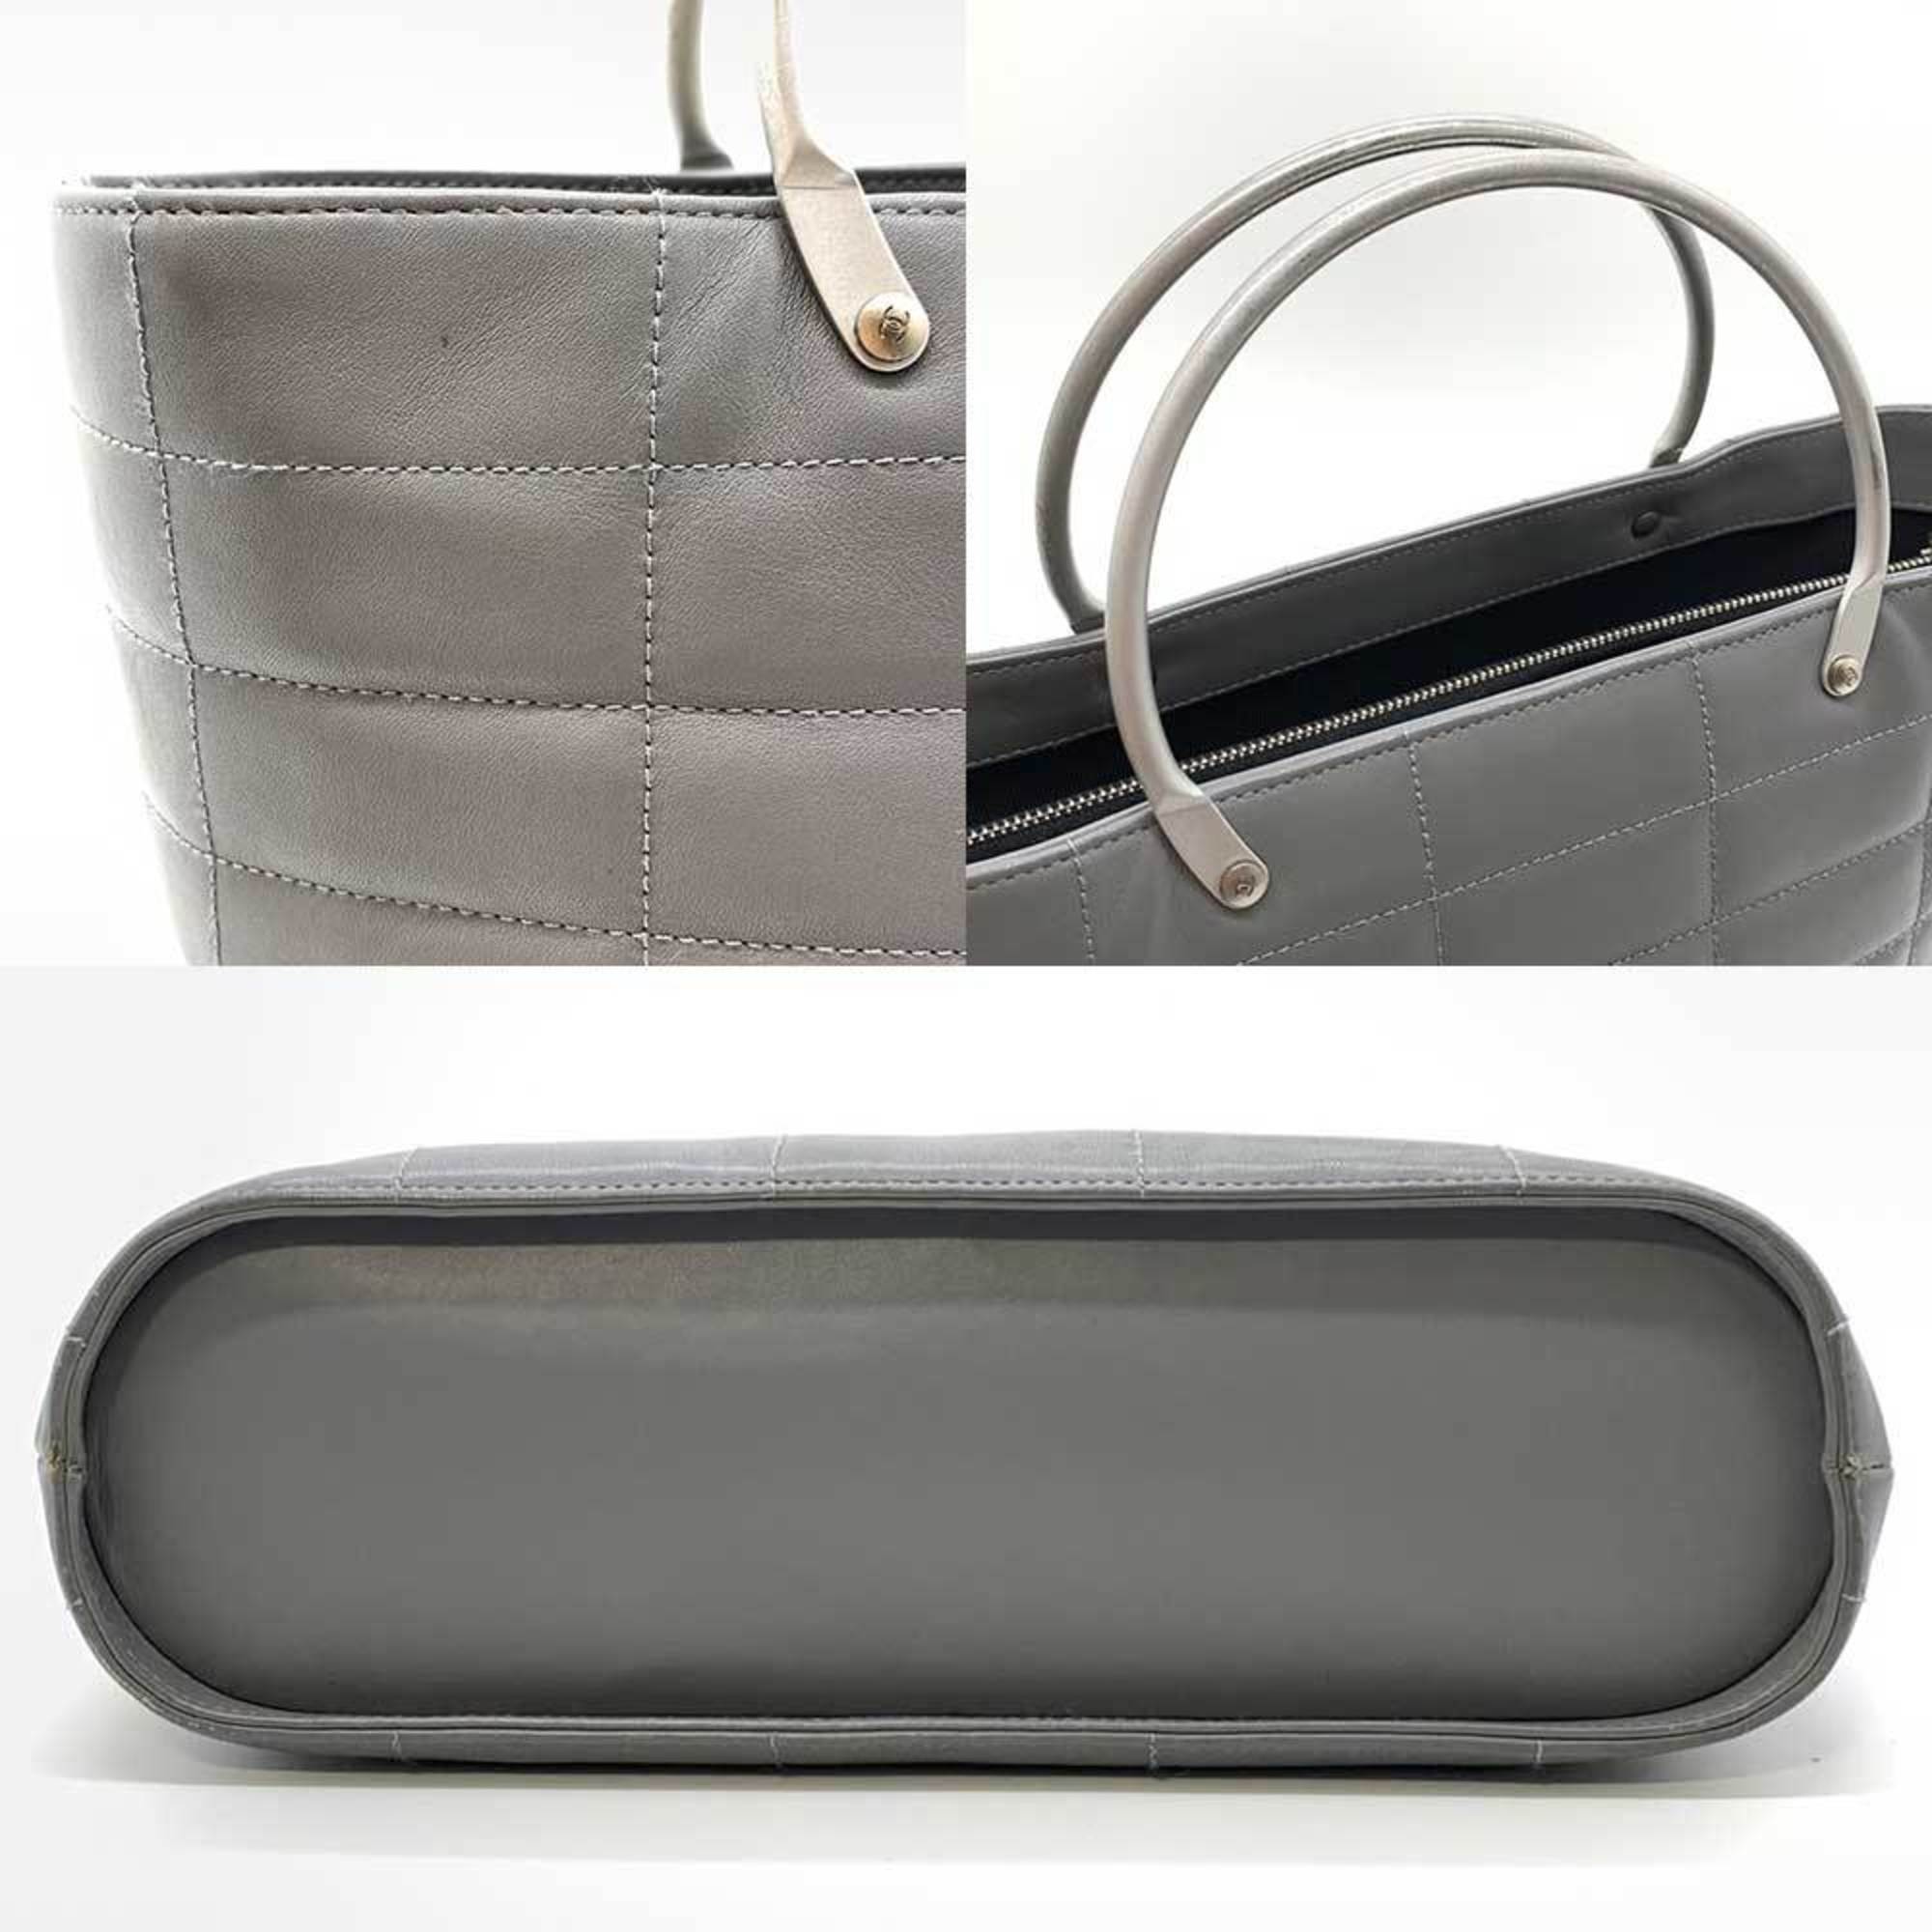 Chanel Chocolate Bar Handbag Grey Old Silver Calf Leather CHANEL